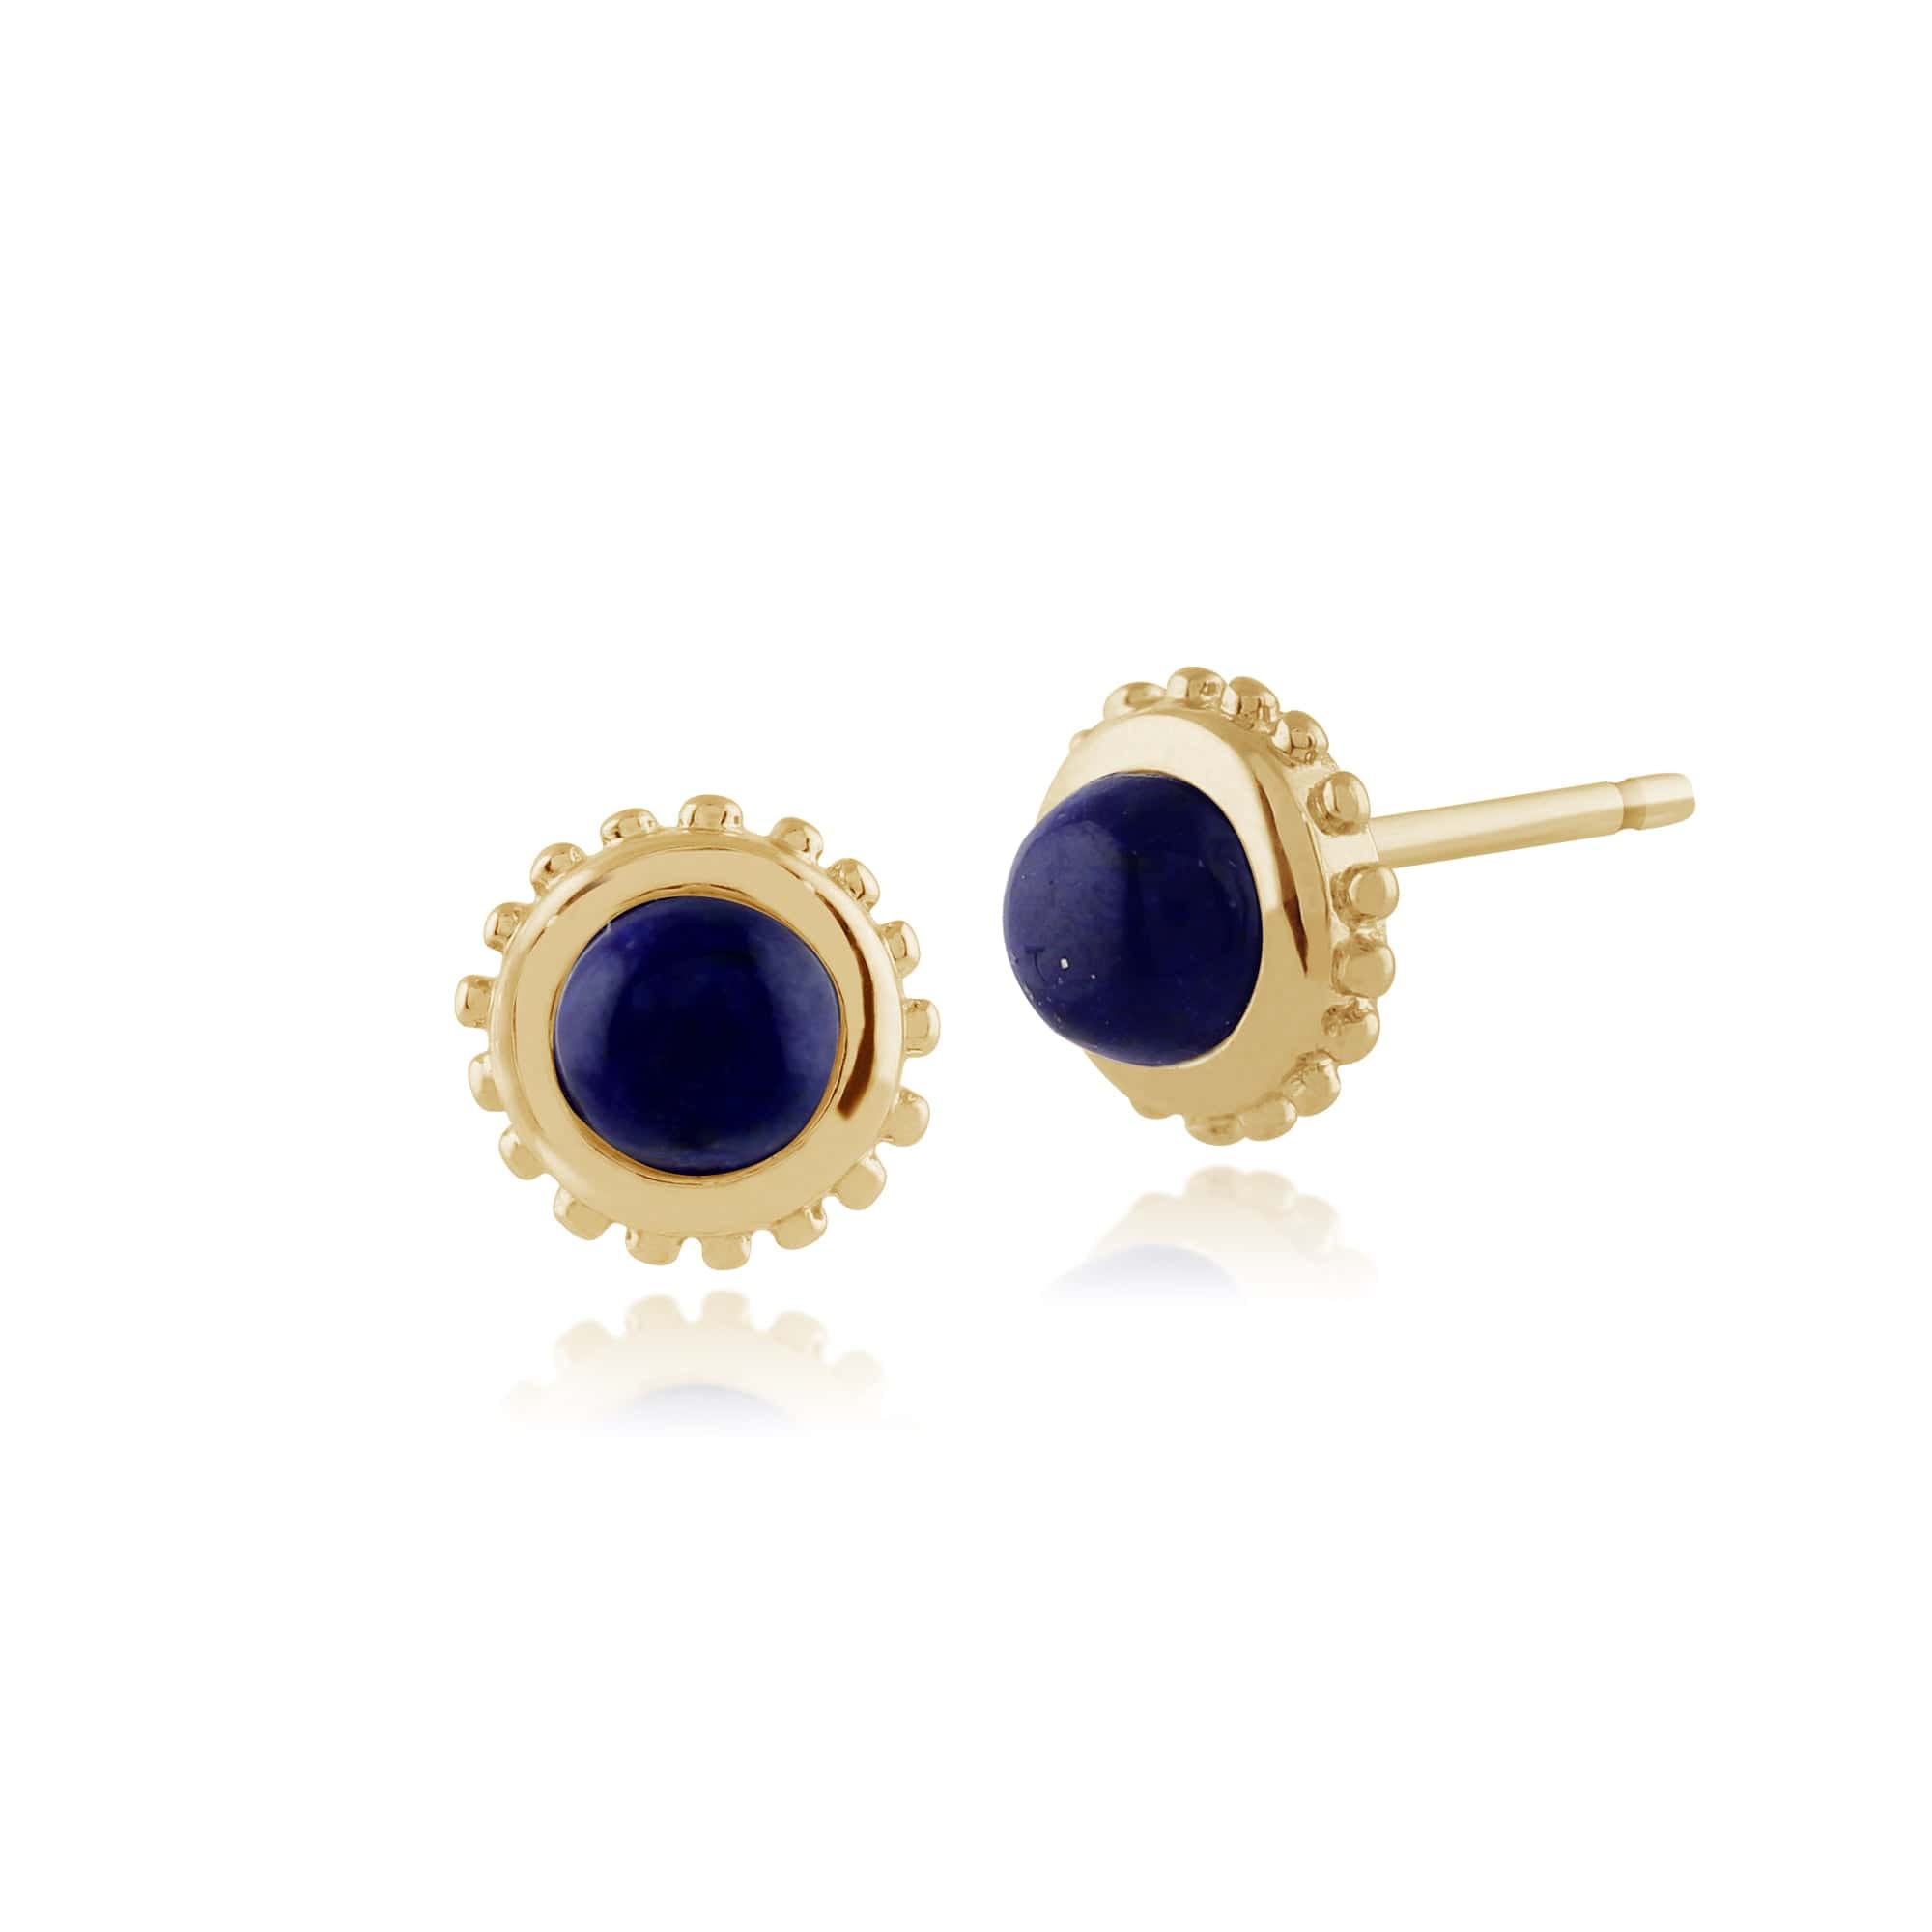 Classic Round Lapis Lazuli Stud Earrings in 9ct Yellow Gold 6mm - Gemondo